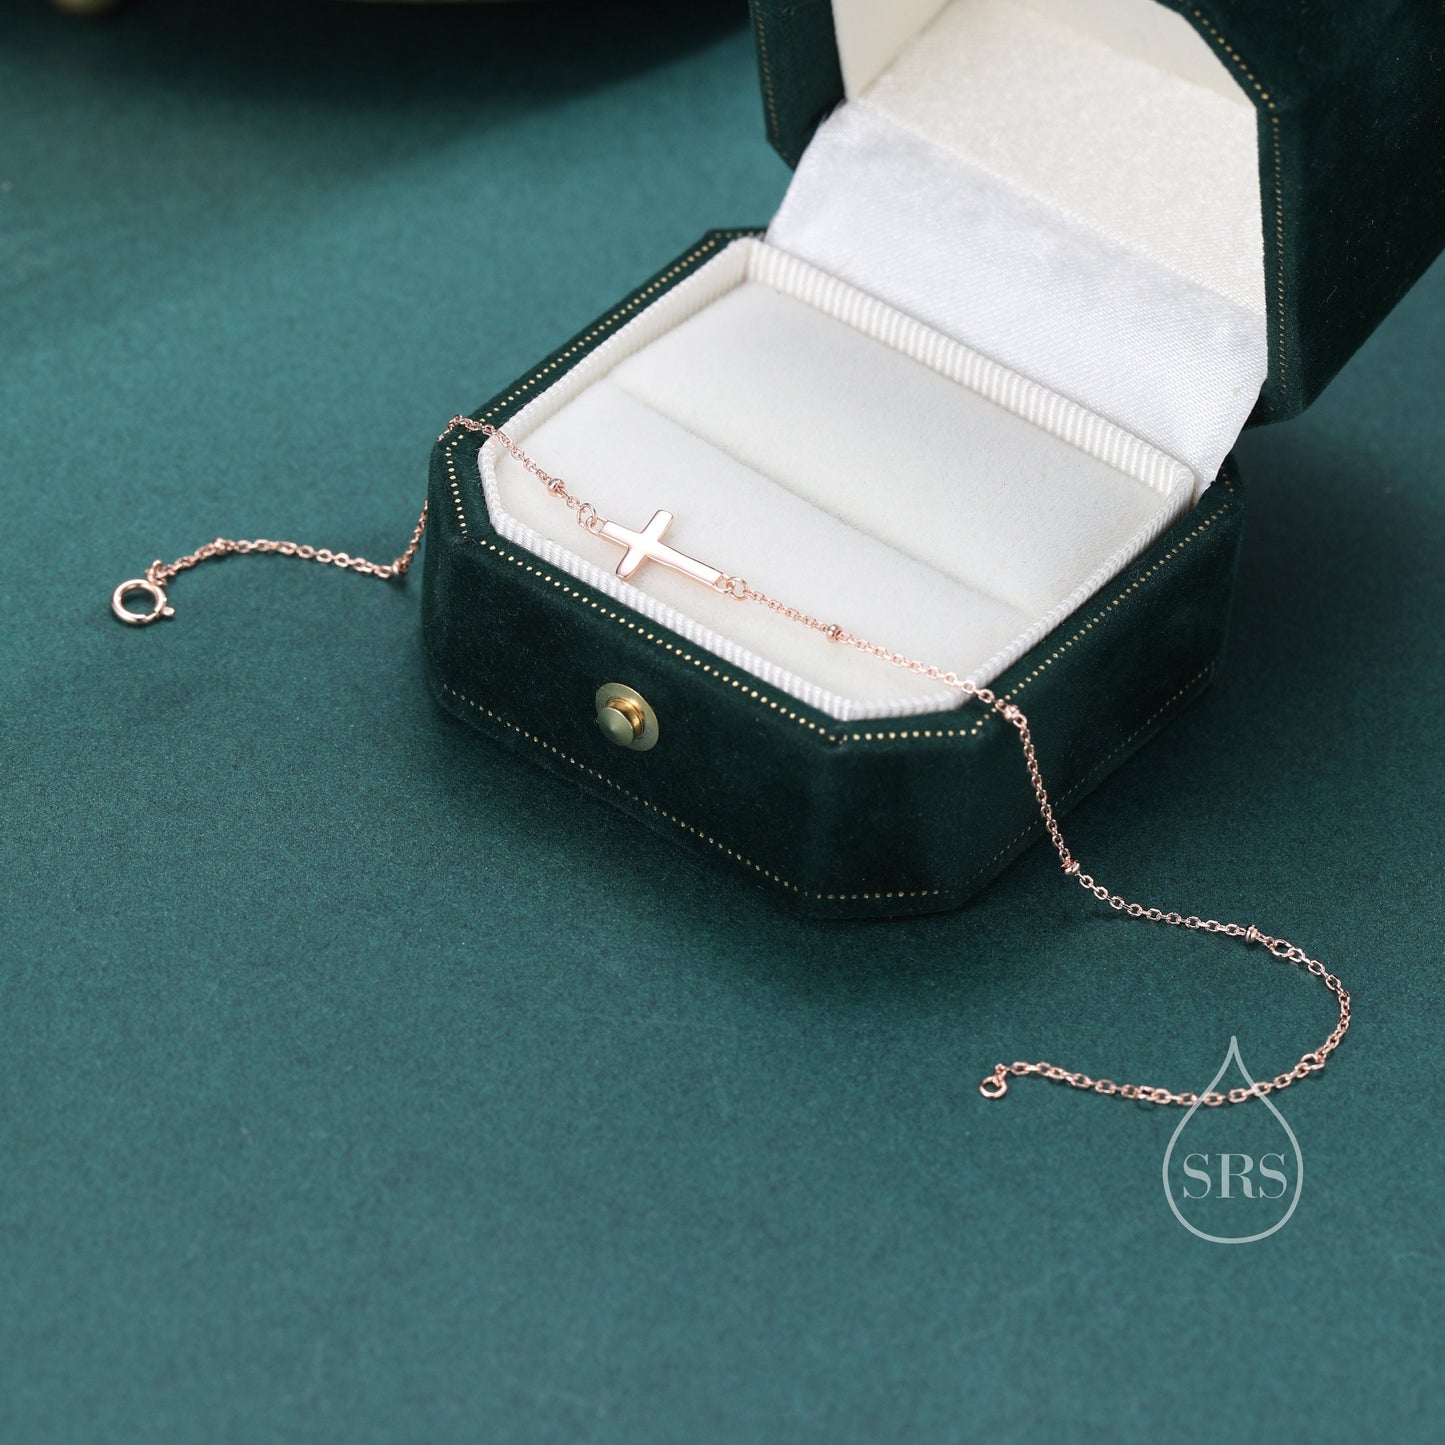 Dainty Cross Bracelet with Satellite Chain in Sterling Silver, Silver or Gold or Rose Gold,  Minimal Cross Bracelet, Minimalist Jewellery